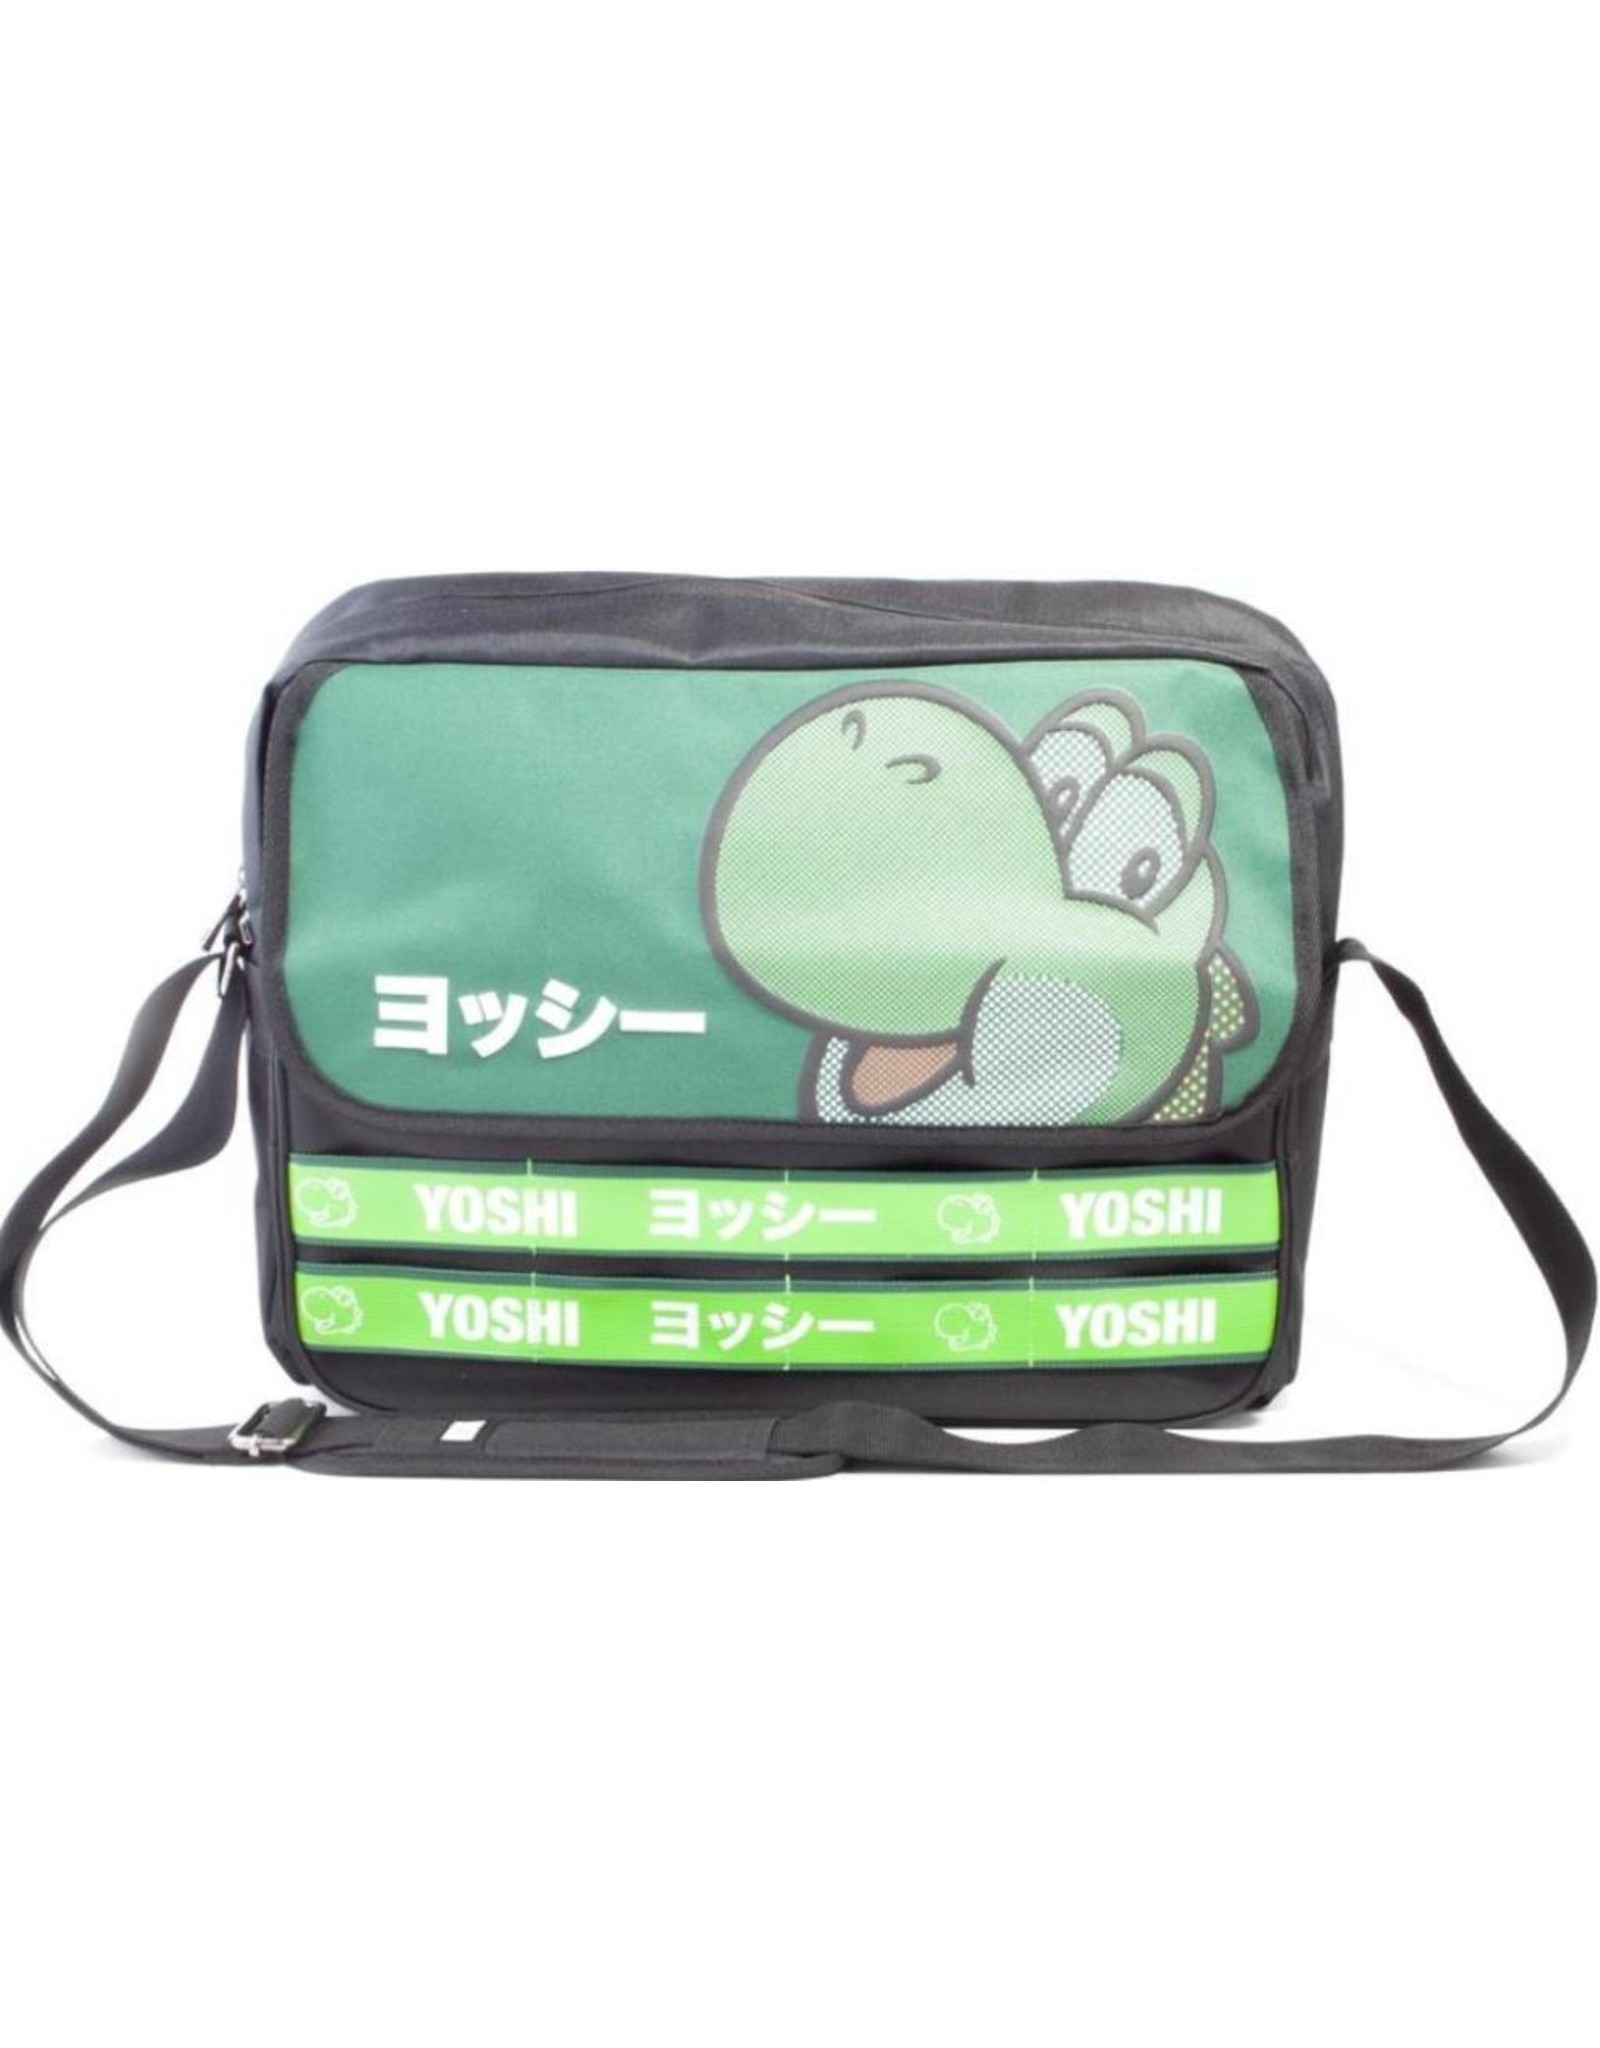 Nintendo Merchandise bags - Nintendo Super Mario Yoshi taped messenger bag